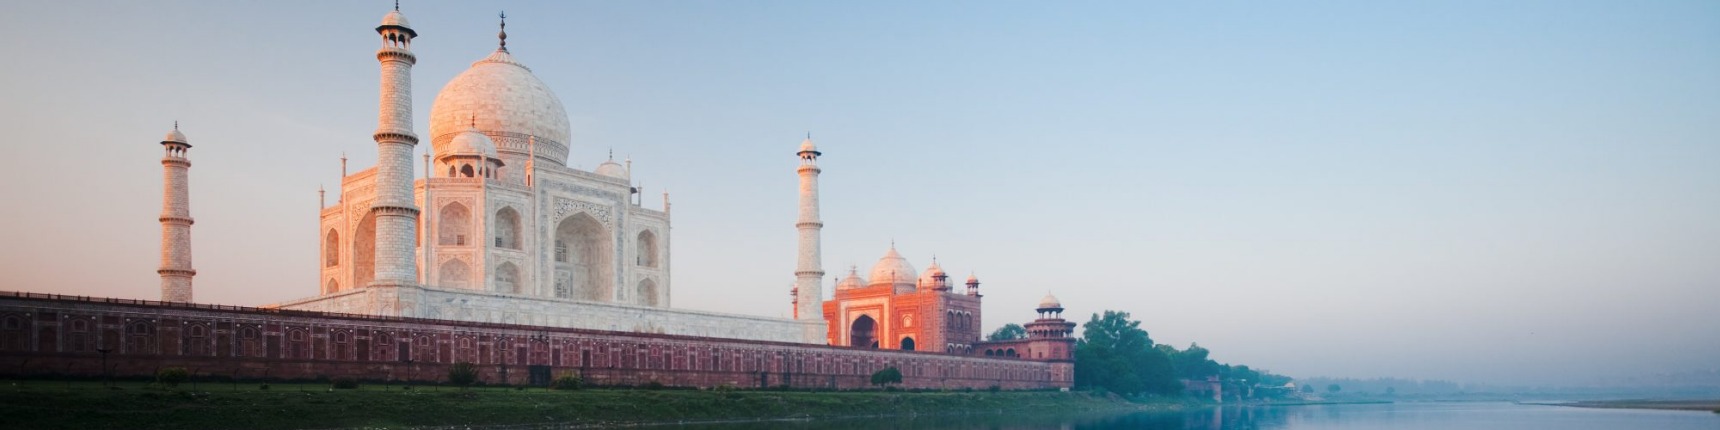 South Asia Travel Taj